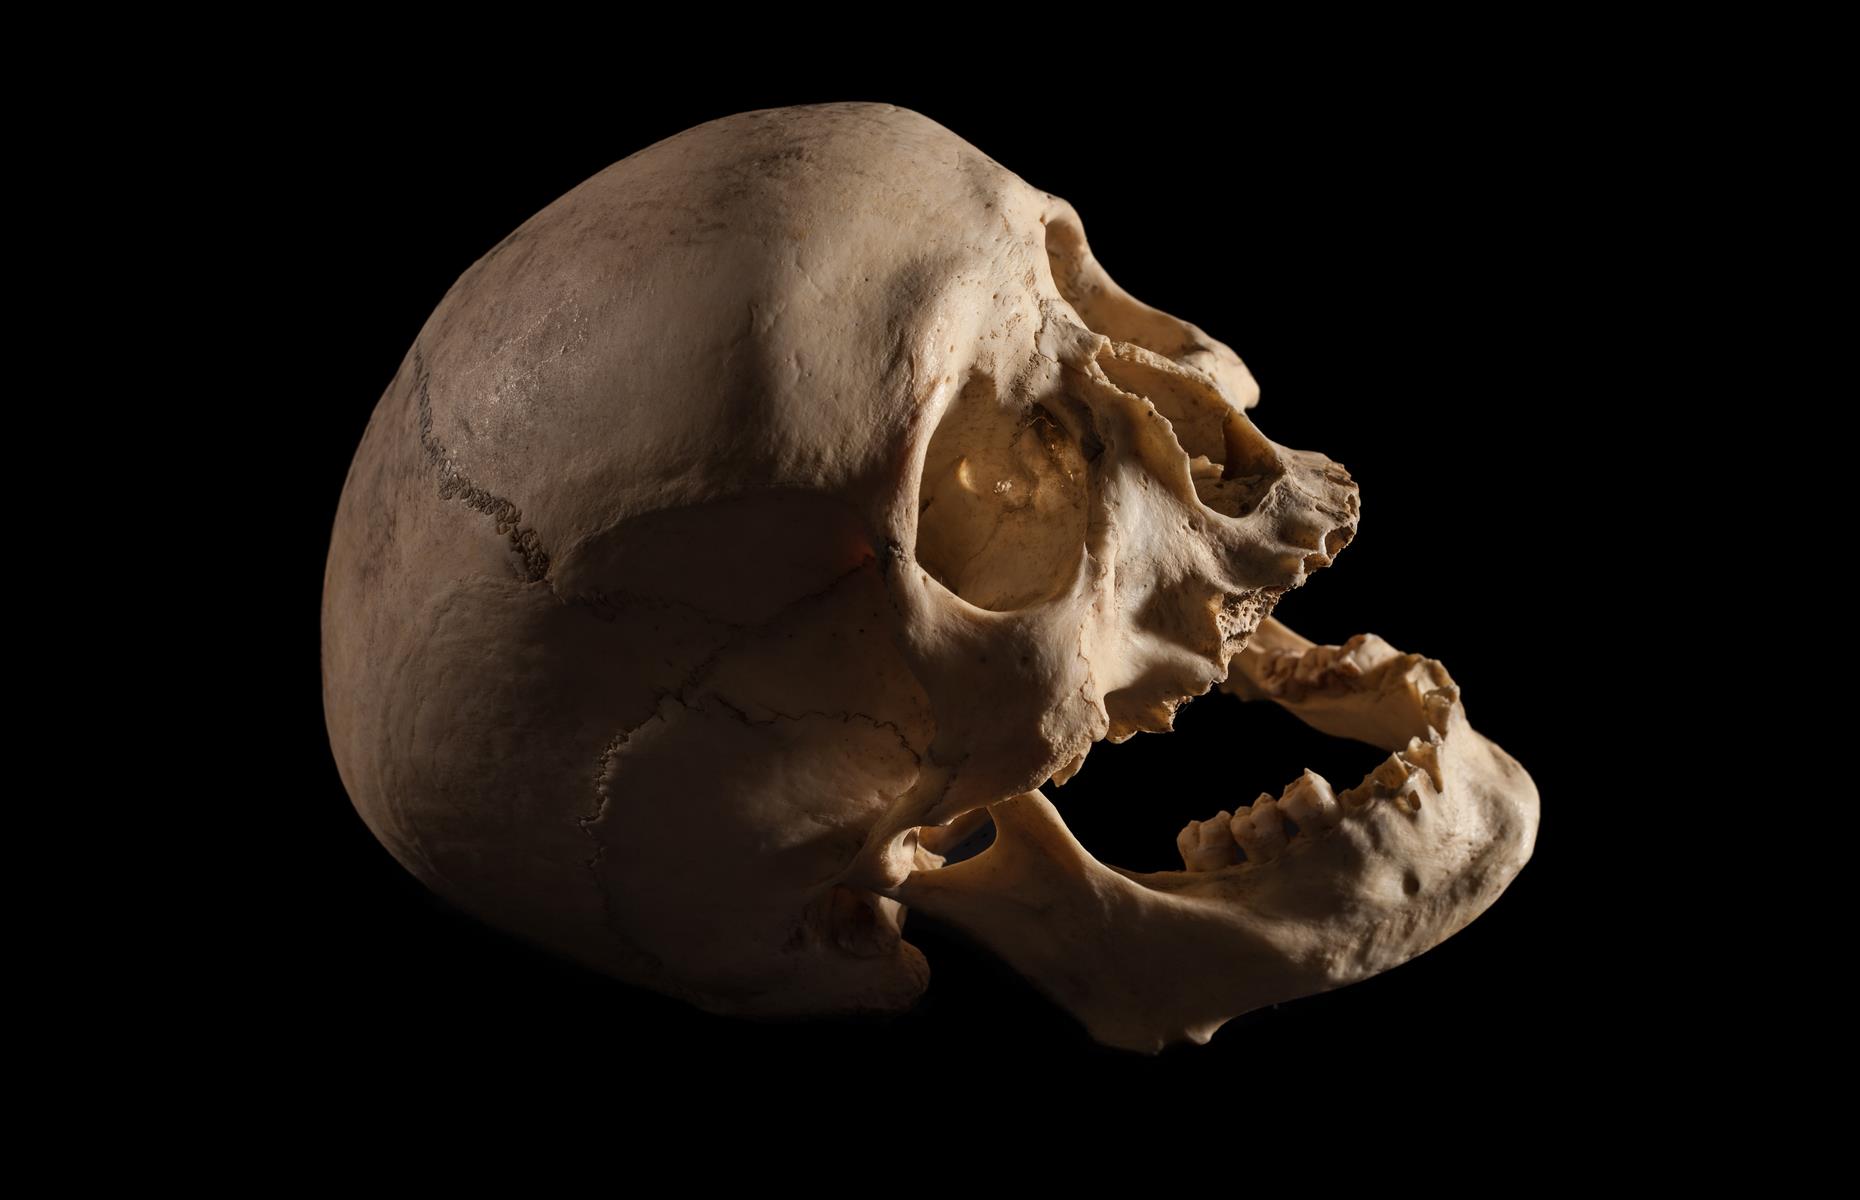 A human skull